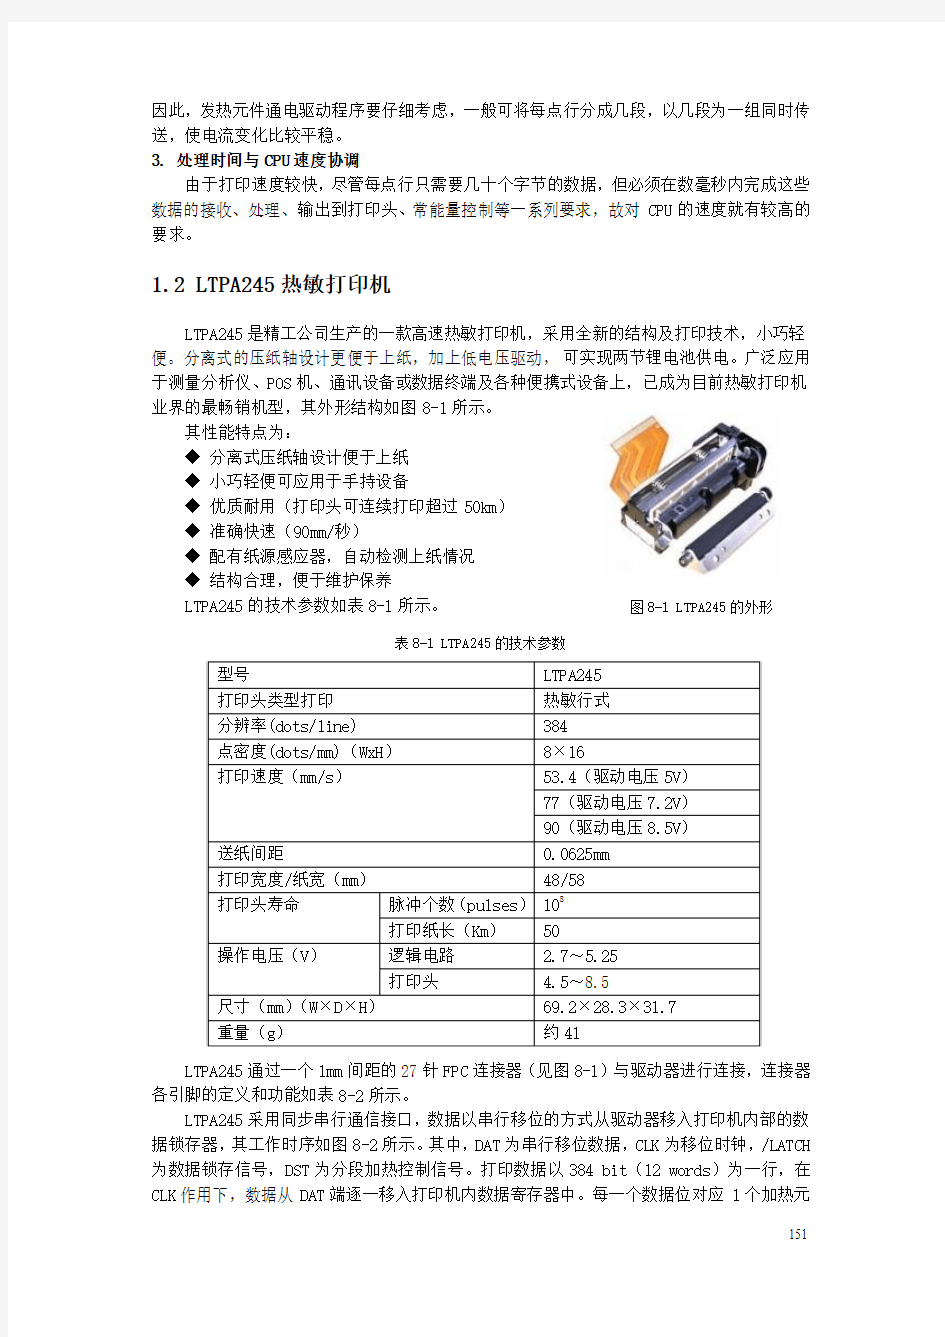 LTPA245热敏打印机驱动设计